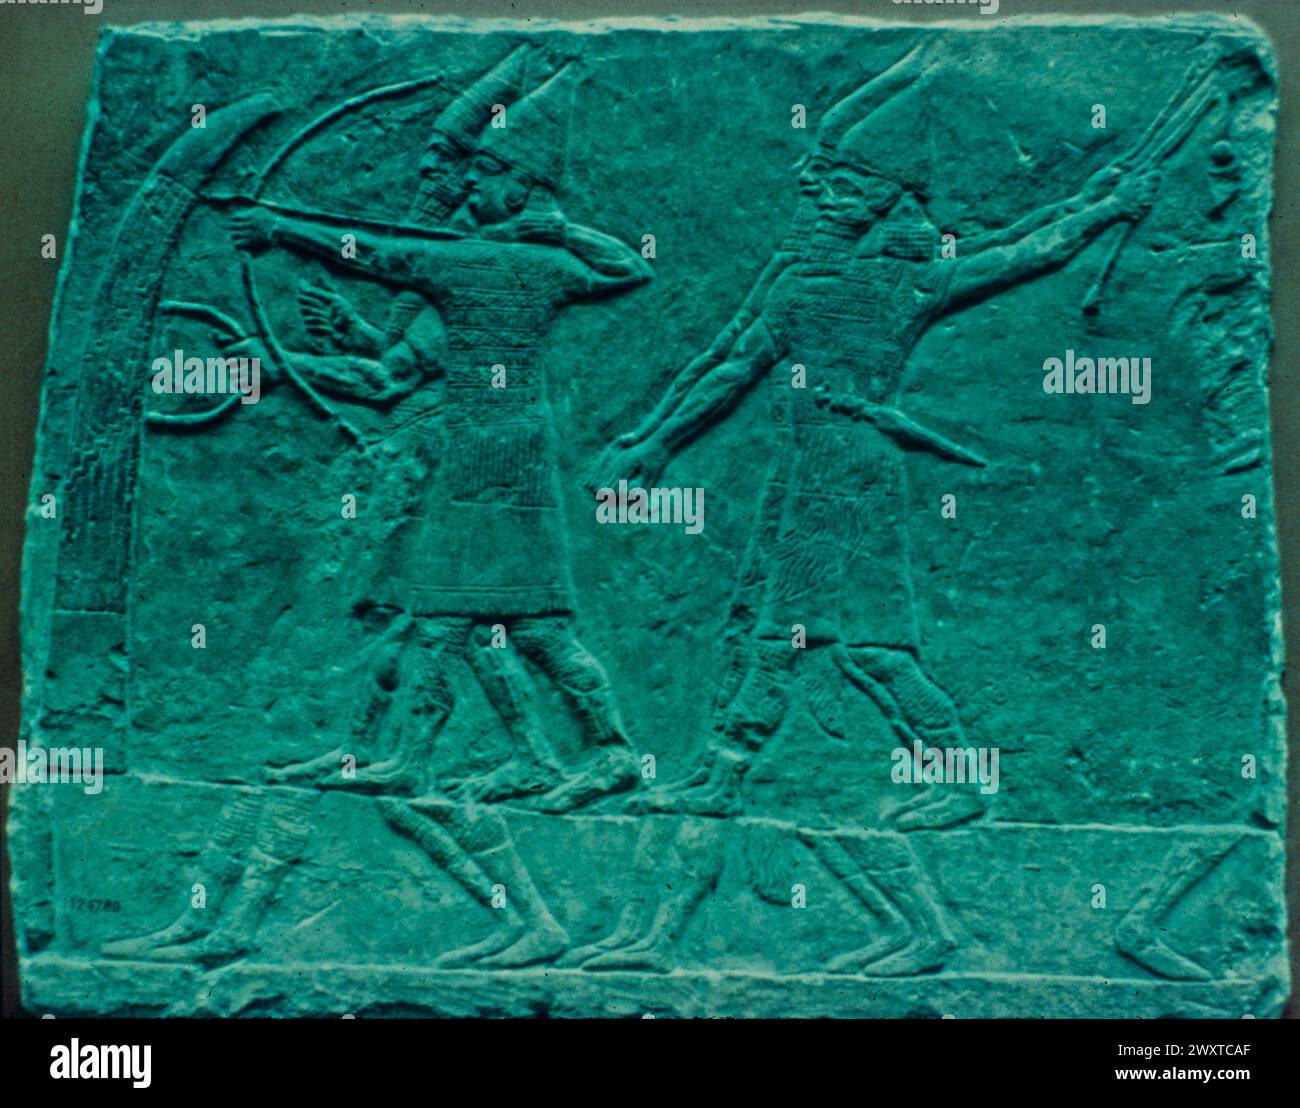 Assyrian archers and slingers in battle, bas-relief, Sennacherib's Palace, Nineveh, Mesopotamia Stock Photo